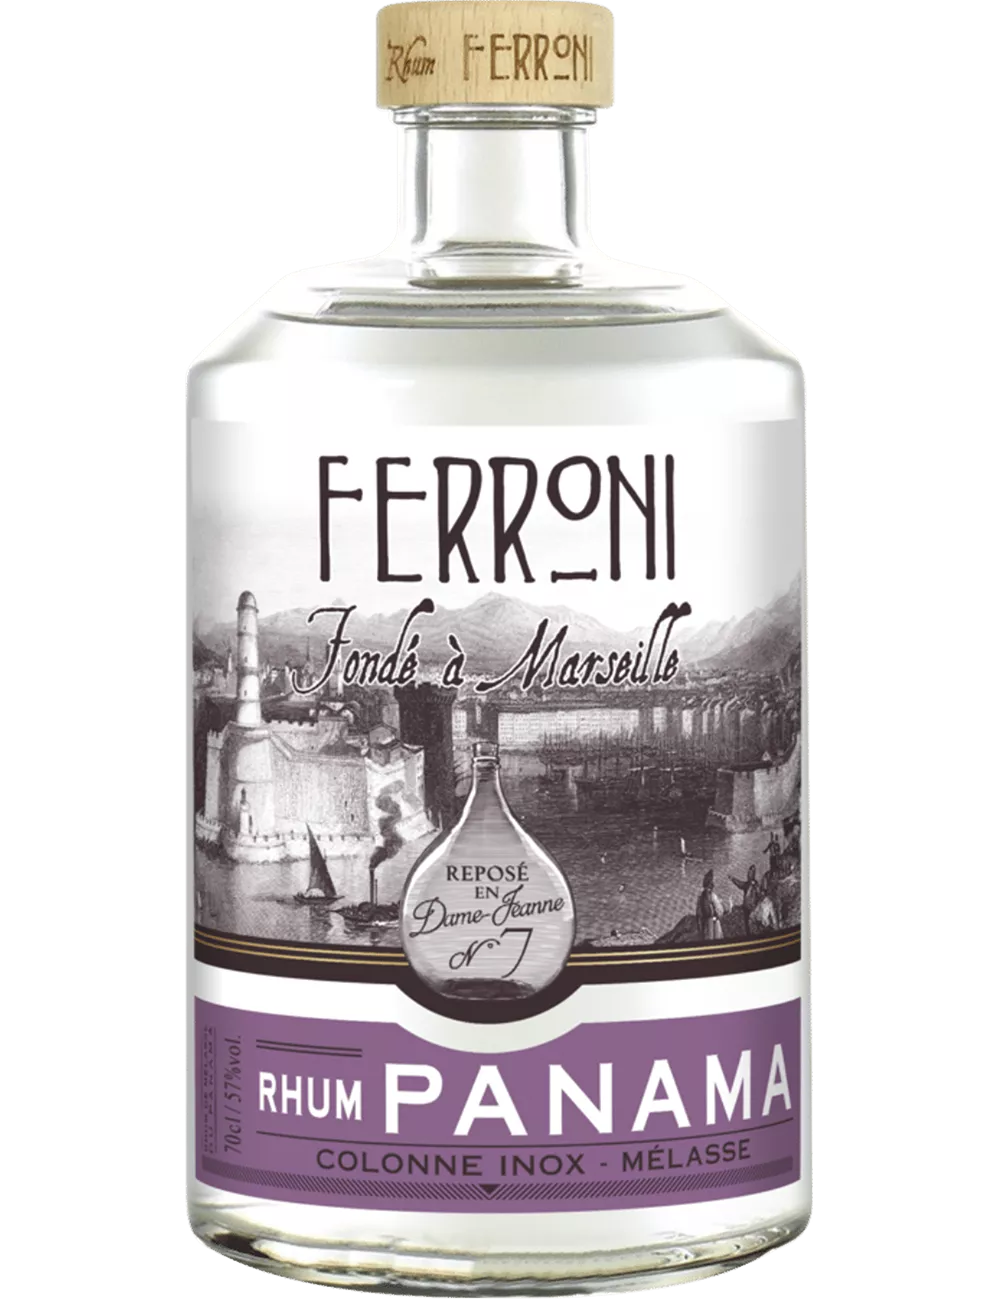 Ferroni - Dame Jeanne - N°7 Panama - Rhum blanc de mélasse